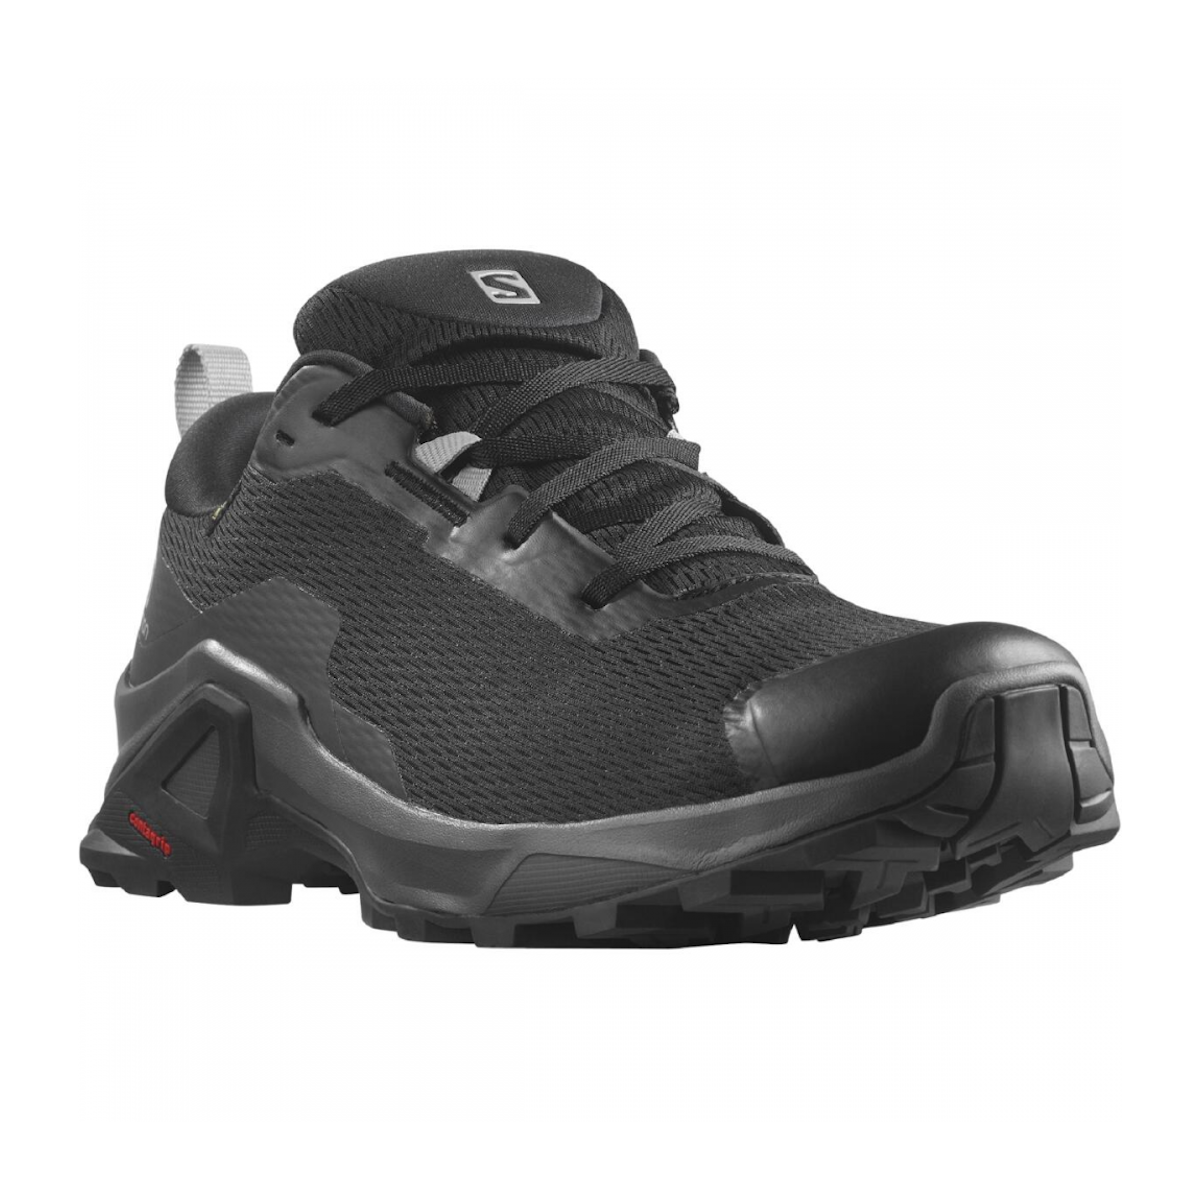 SALOMON X REVEAL 2 GTX hiking footwear - black/grey